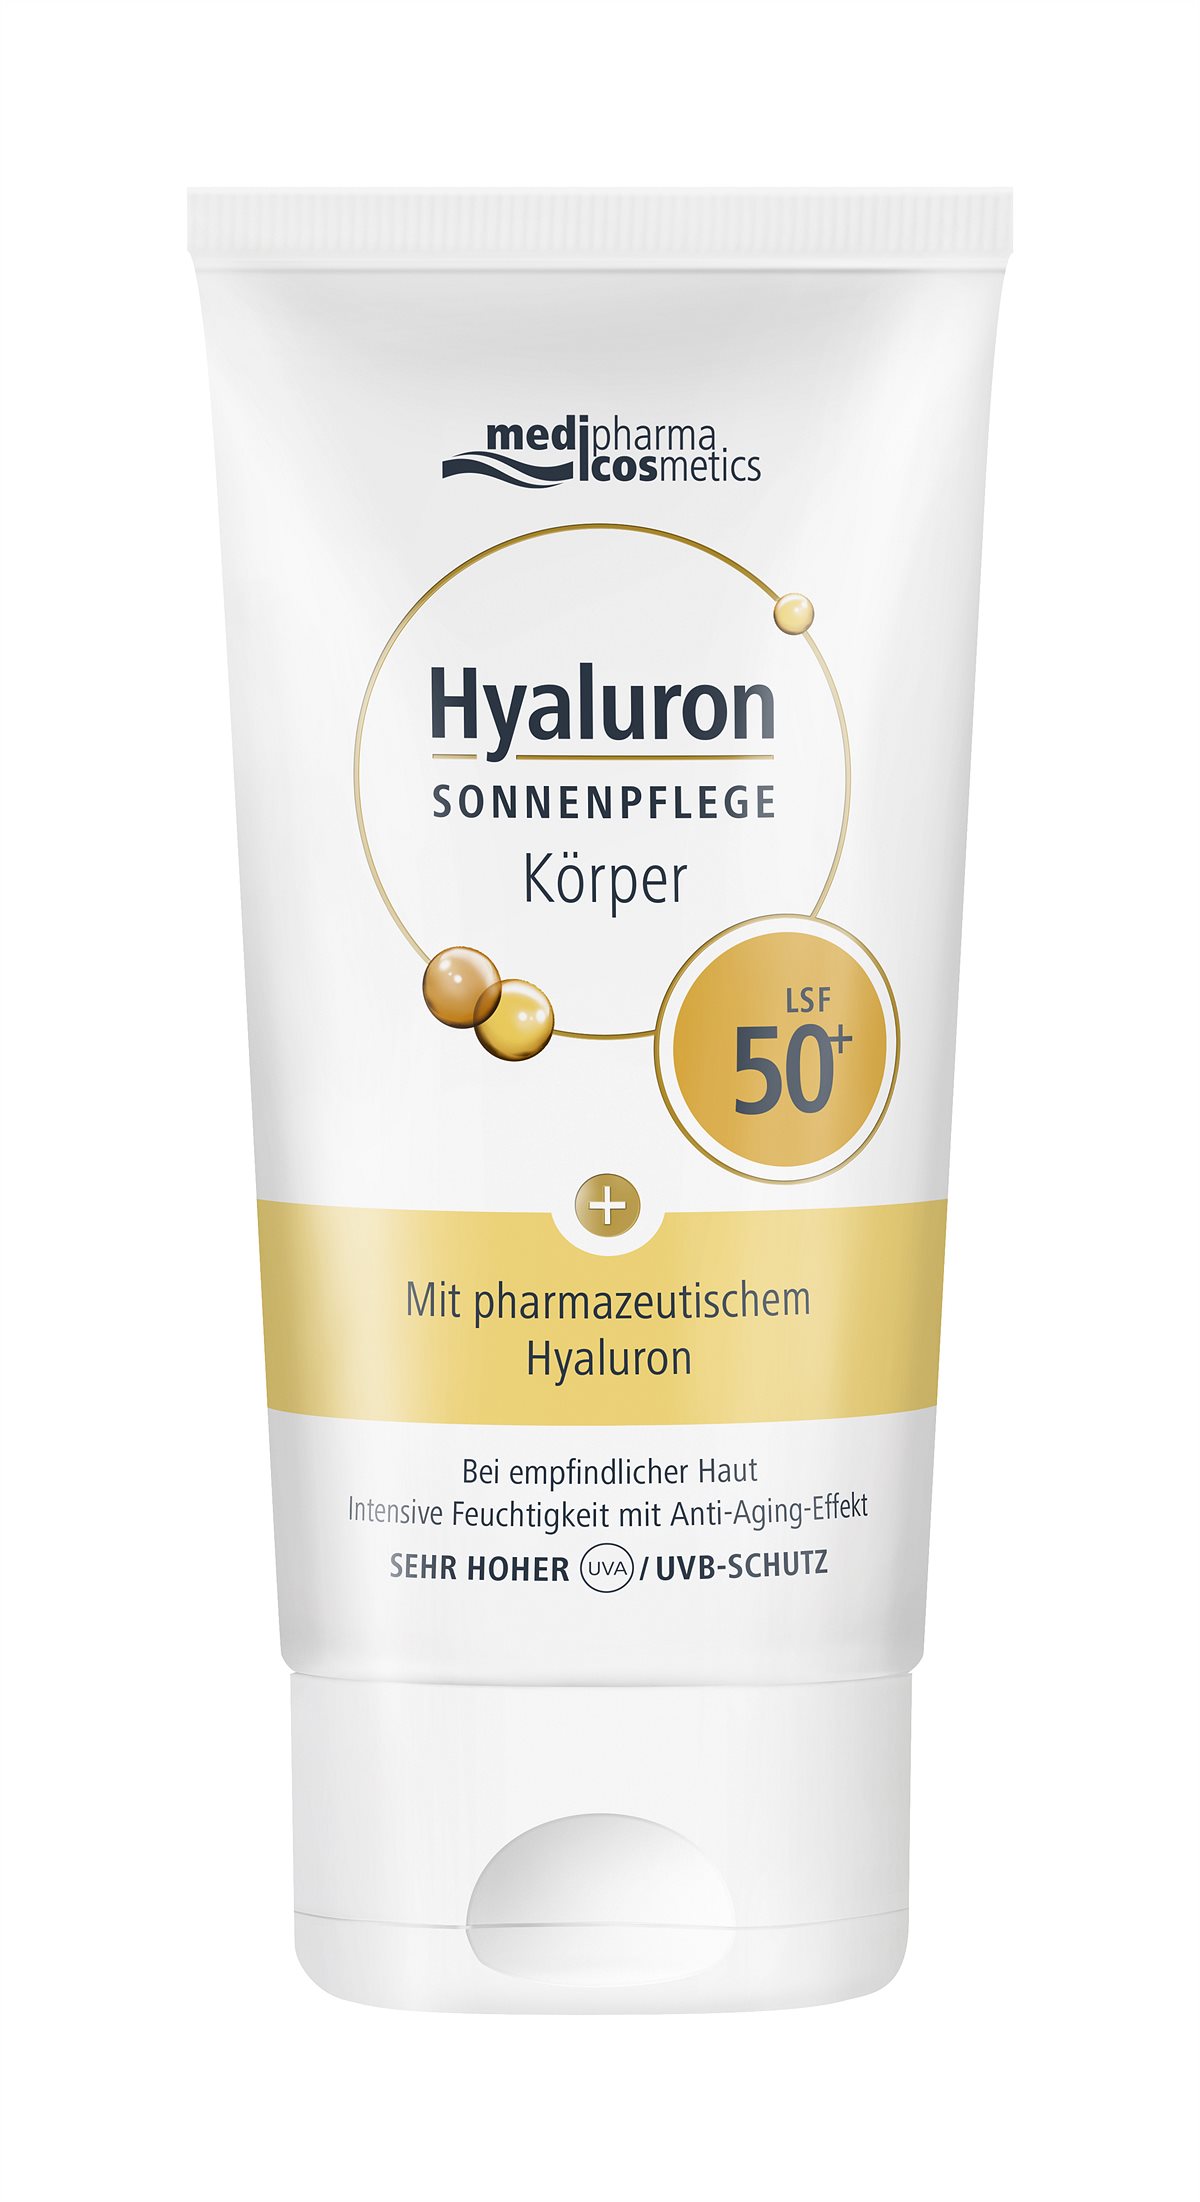 medipharma cosmetics Hyaluron SONNENPFLEGE Körper 50